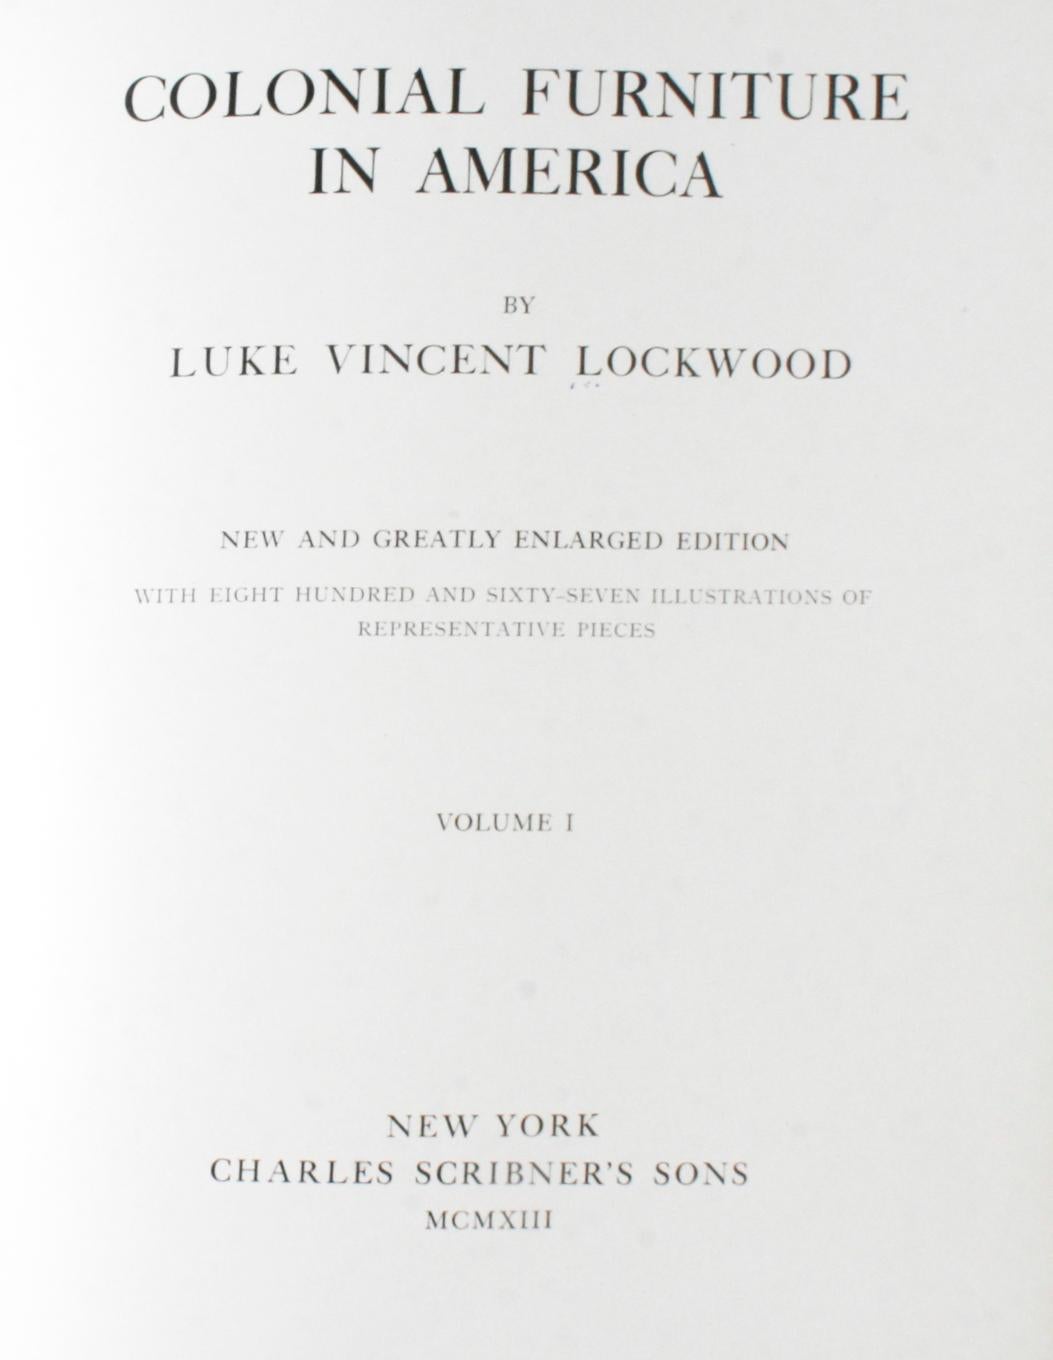 American Colonial Furniture in America by Luke Vincent Lockwood, Volumes I & II